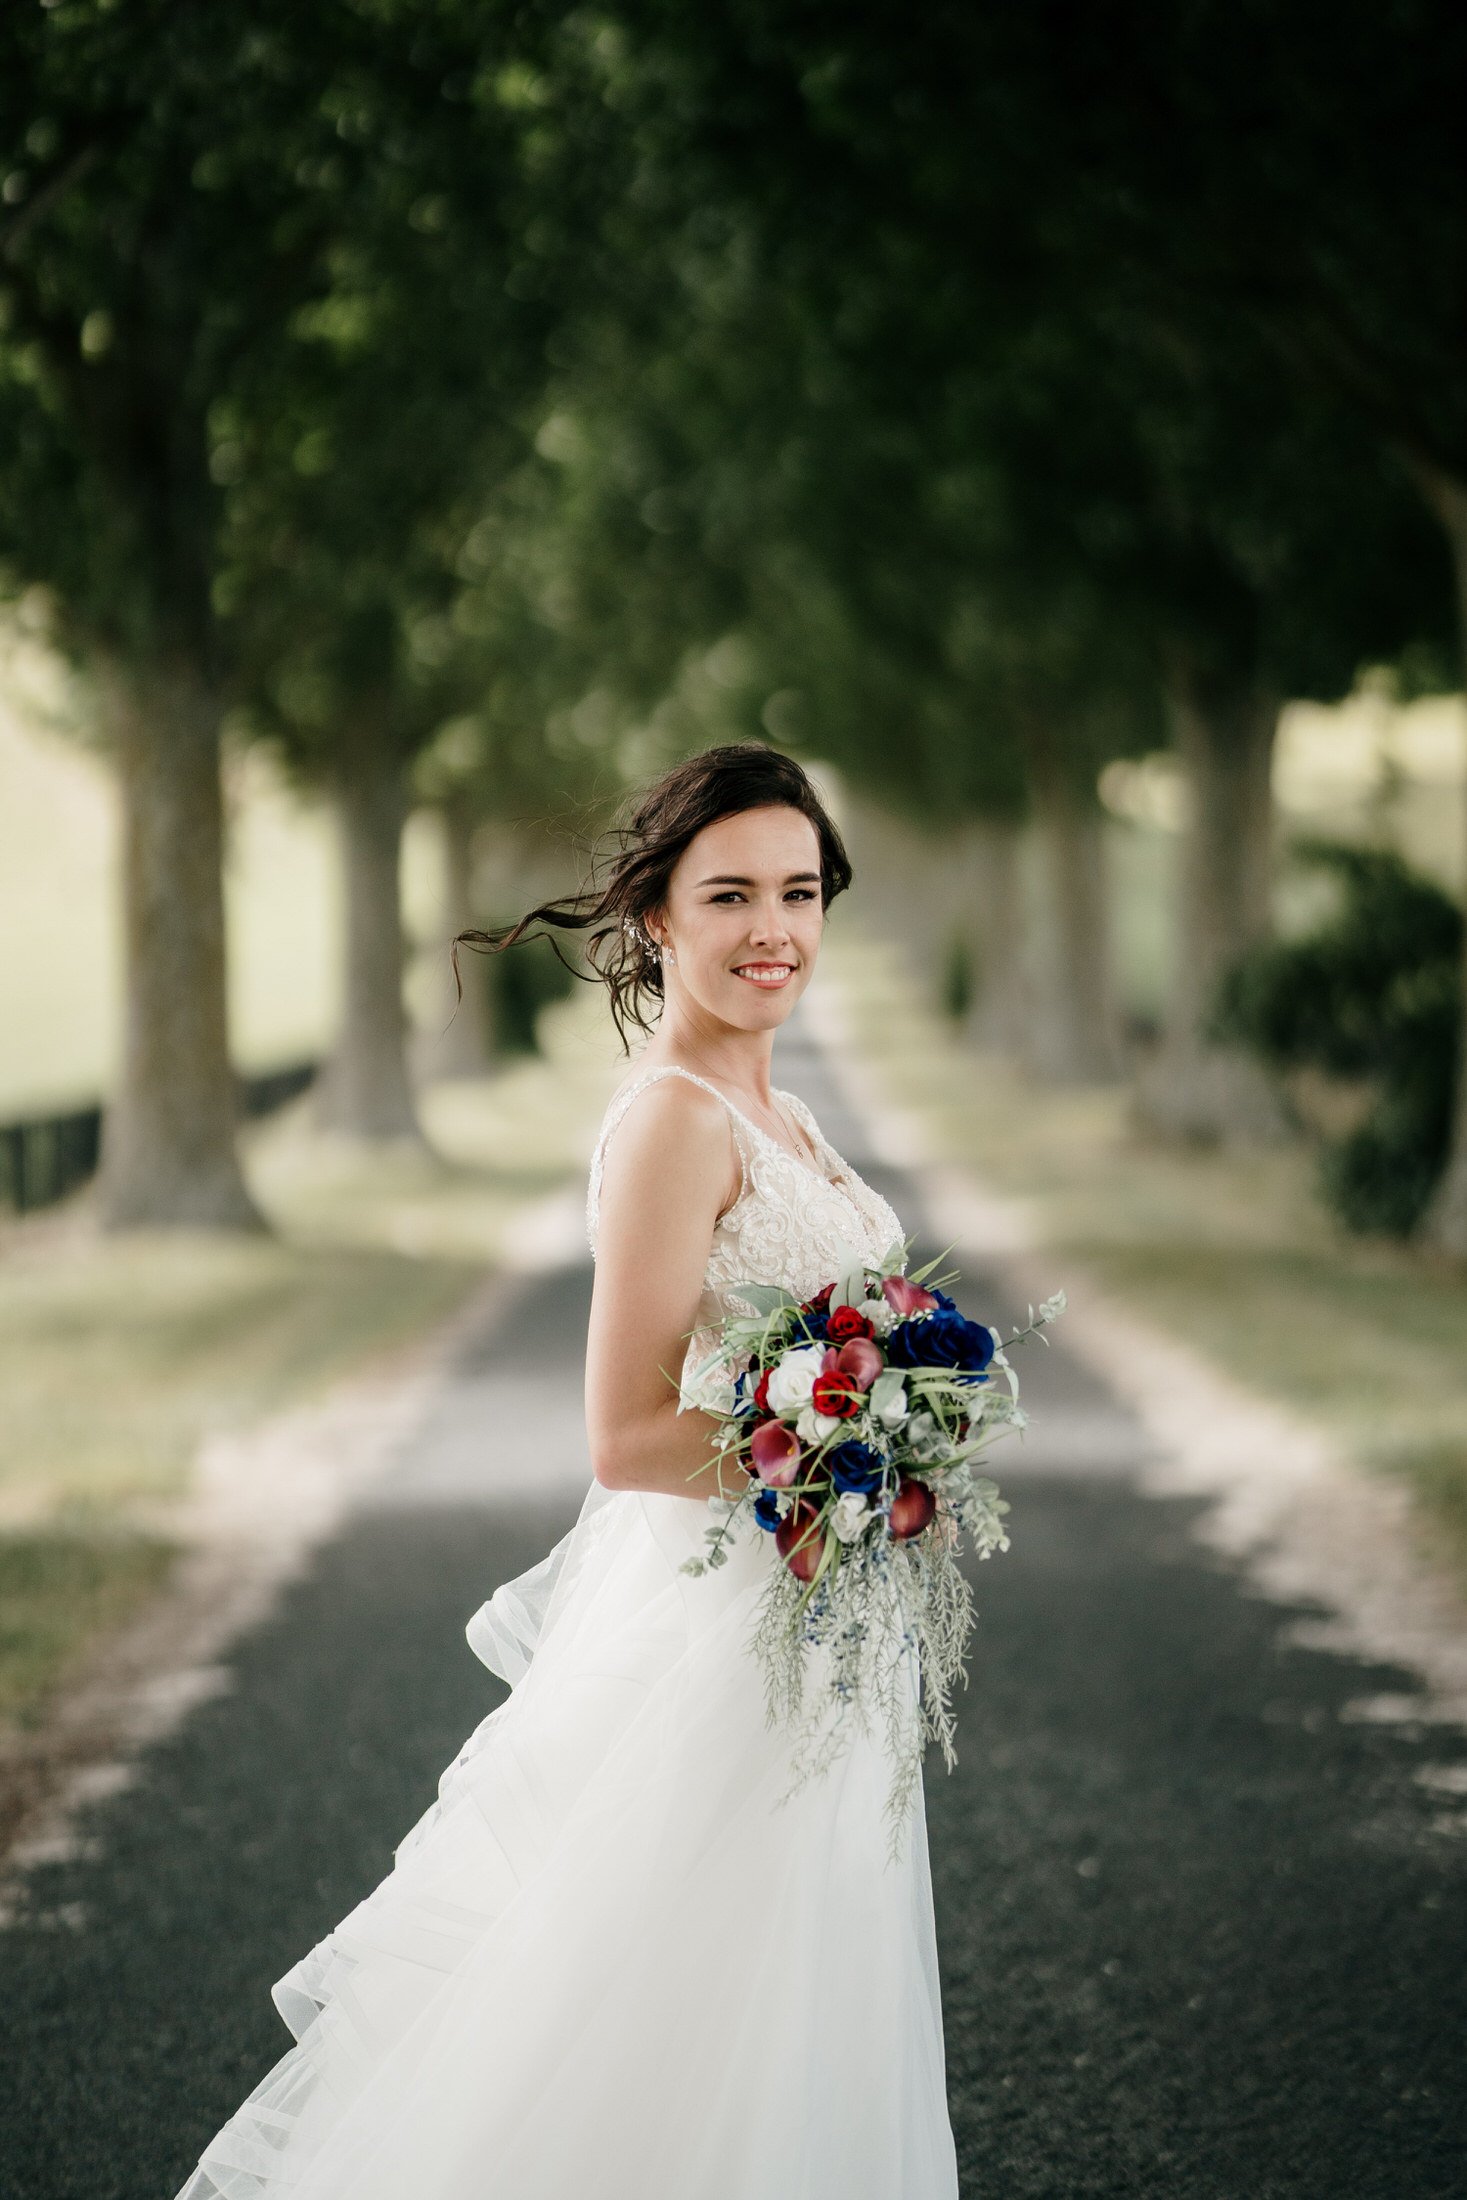 Astral-bridal-wedding-gown-photographer-auckland-videographer-farm-rustic (5).jpg